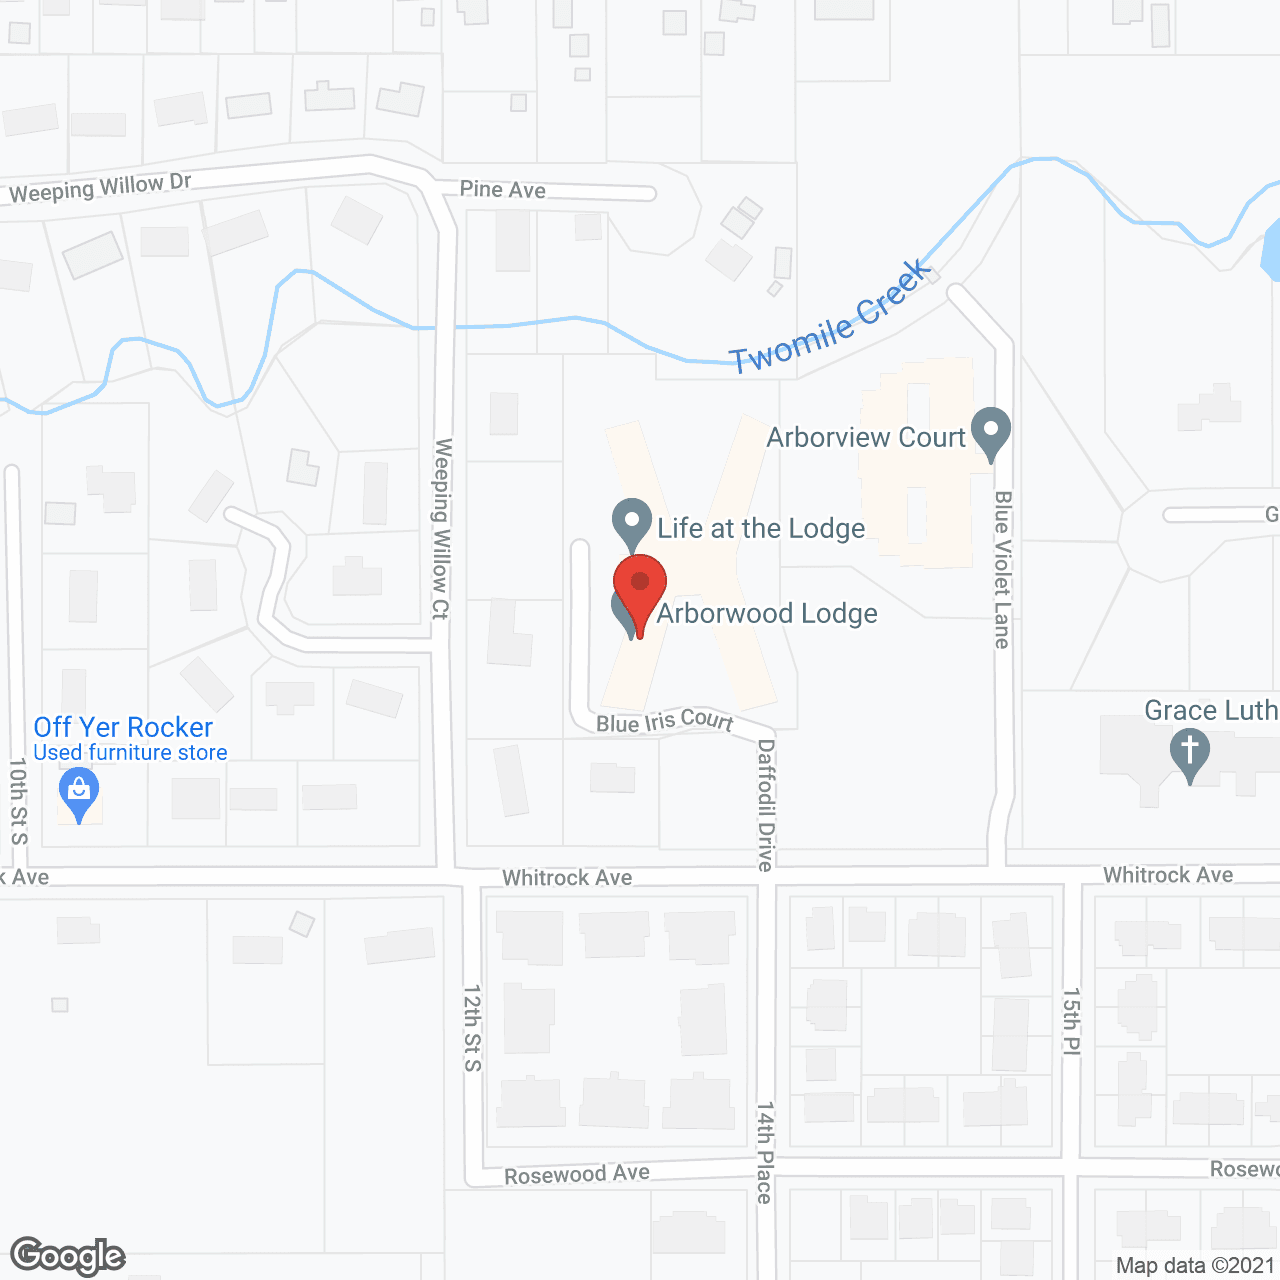 Arborwood Lodge in google map